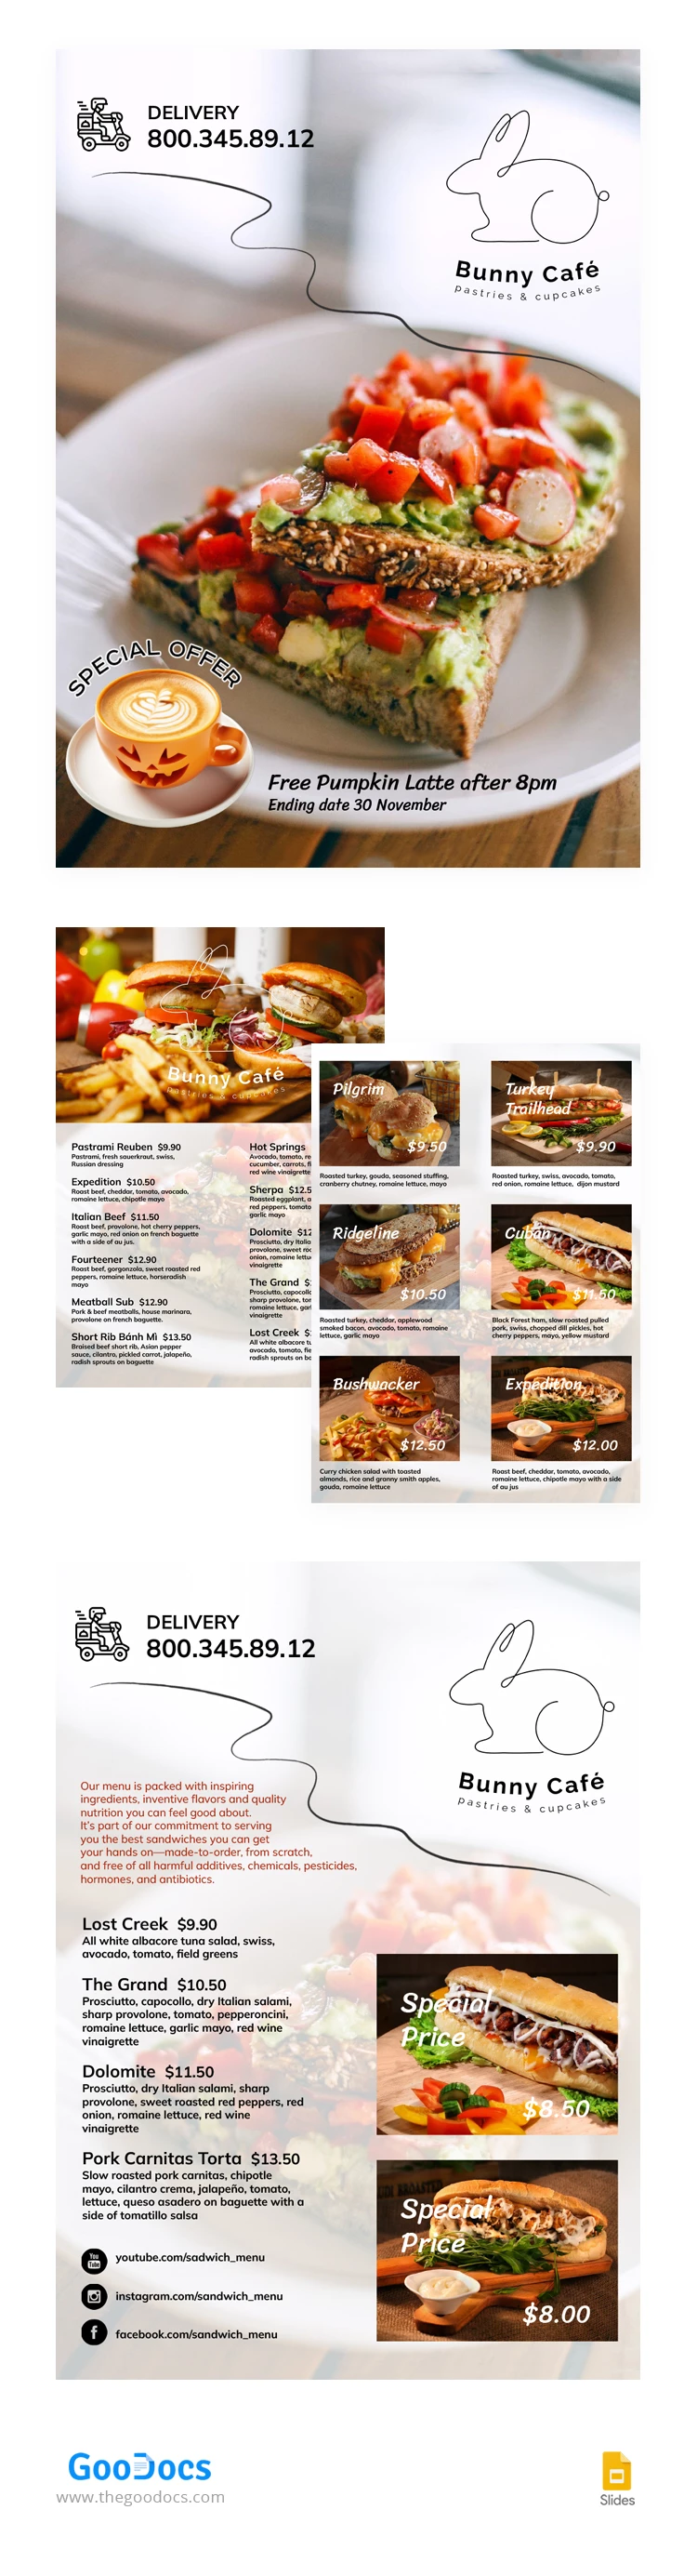 Menu Sandwich Lapin - free Google Docs Template - 10067361